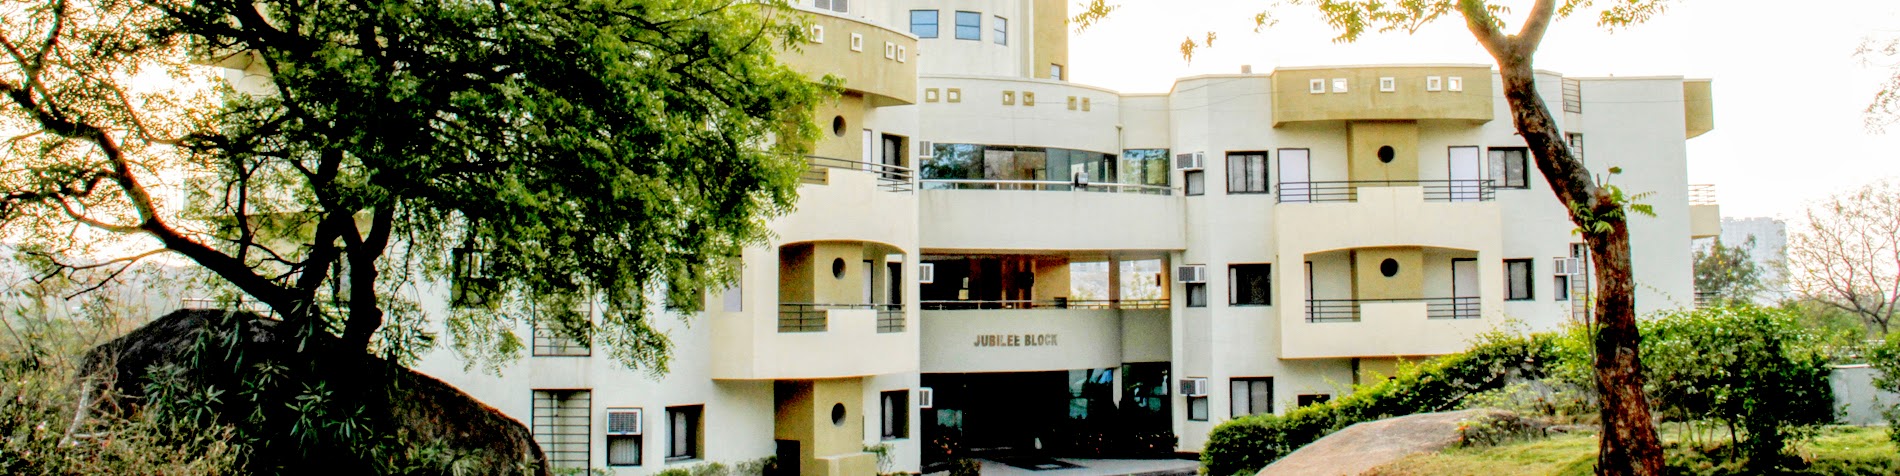 Engineering Staff College of India, Hyderabad Image